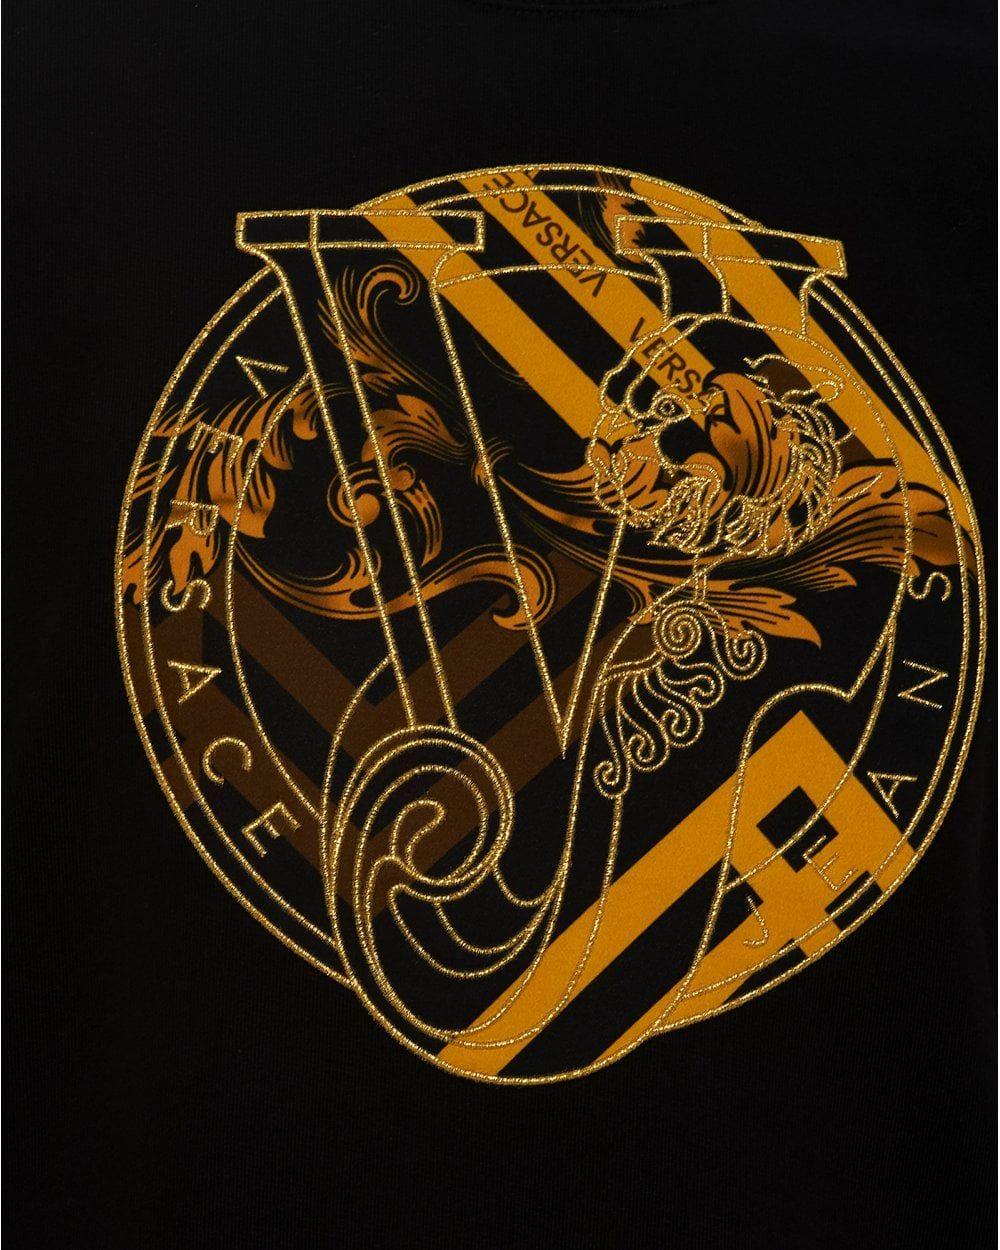 Black and Gold Versace Logo - Versace Jeans Mens Gold Logo Sweatshirt, Black Crew Neck Sweat